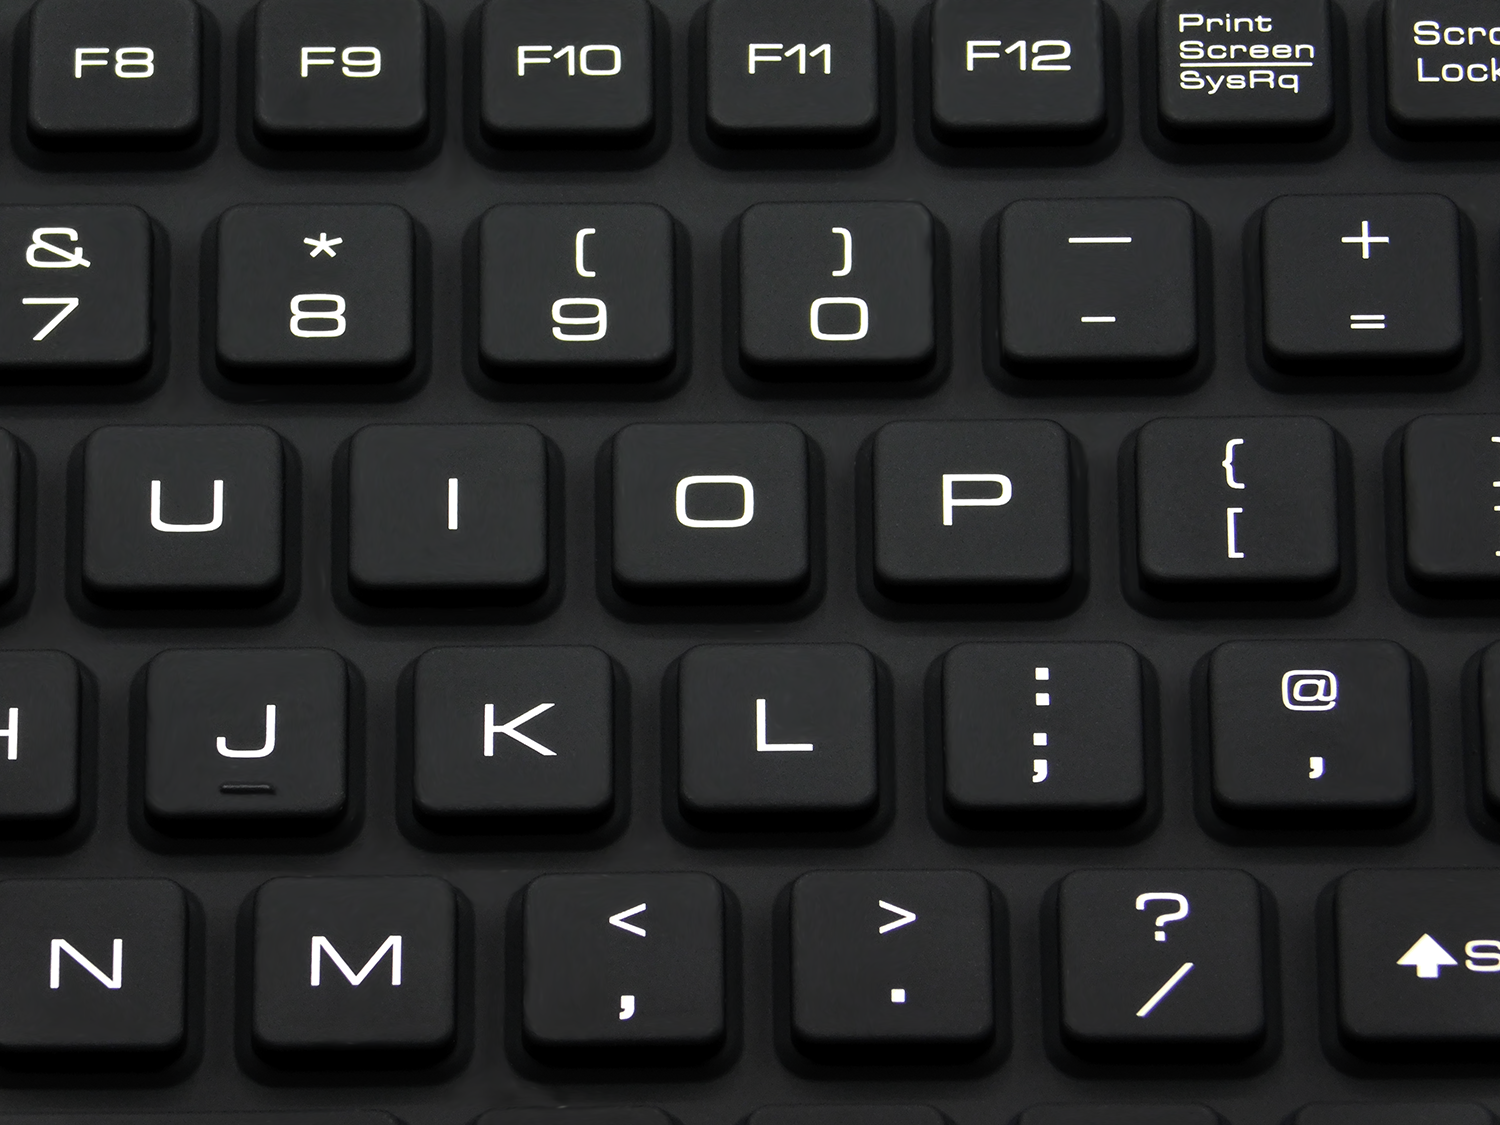 IP68 sealed rubber keyboard 